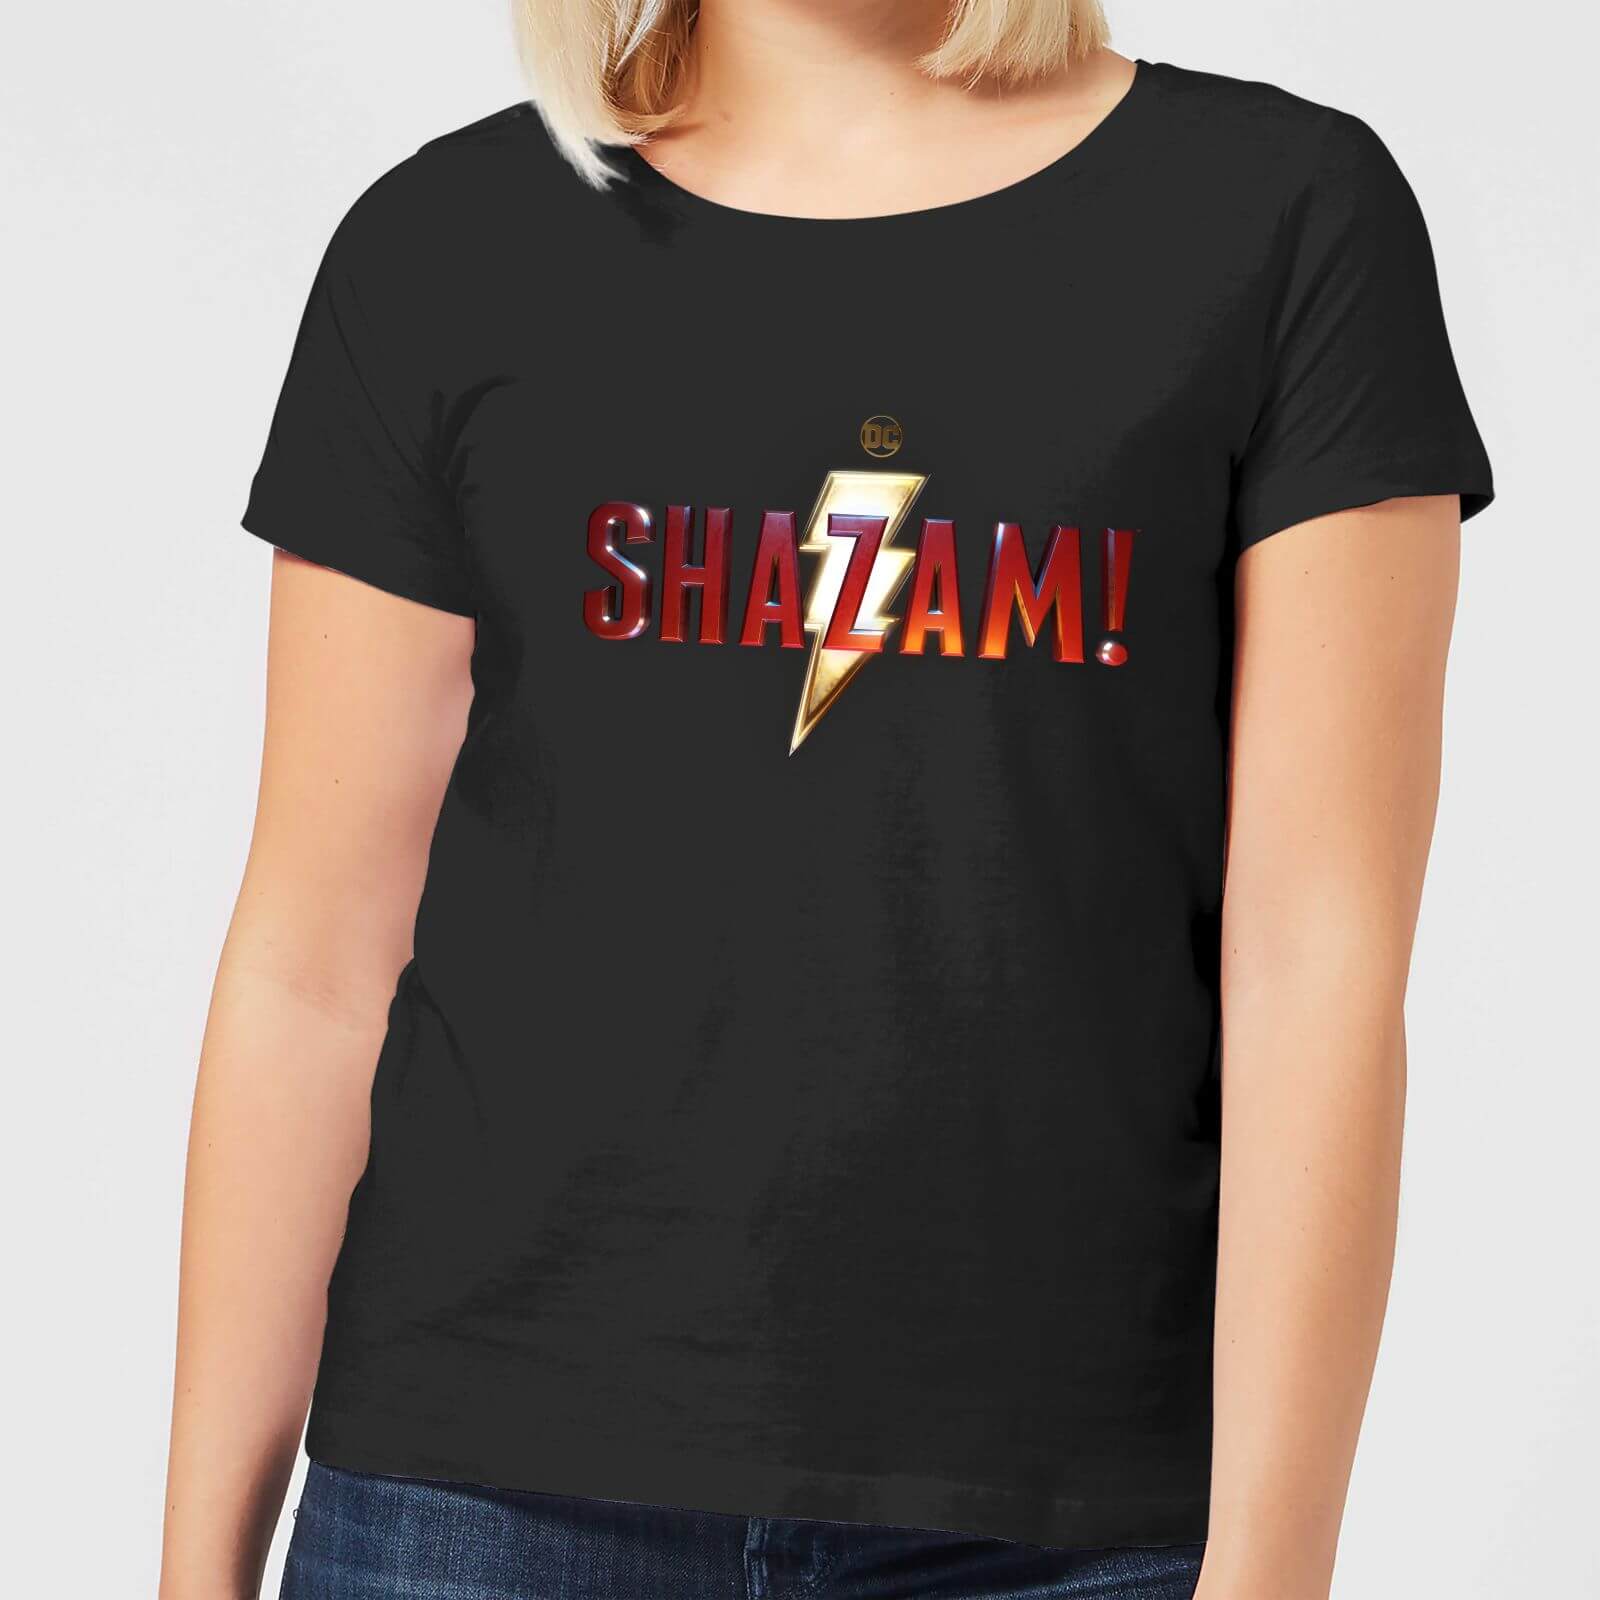 Dc Comics Shazam logo women's t-shirt - black - m